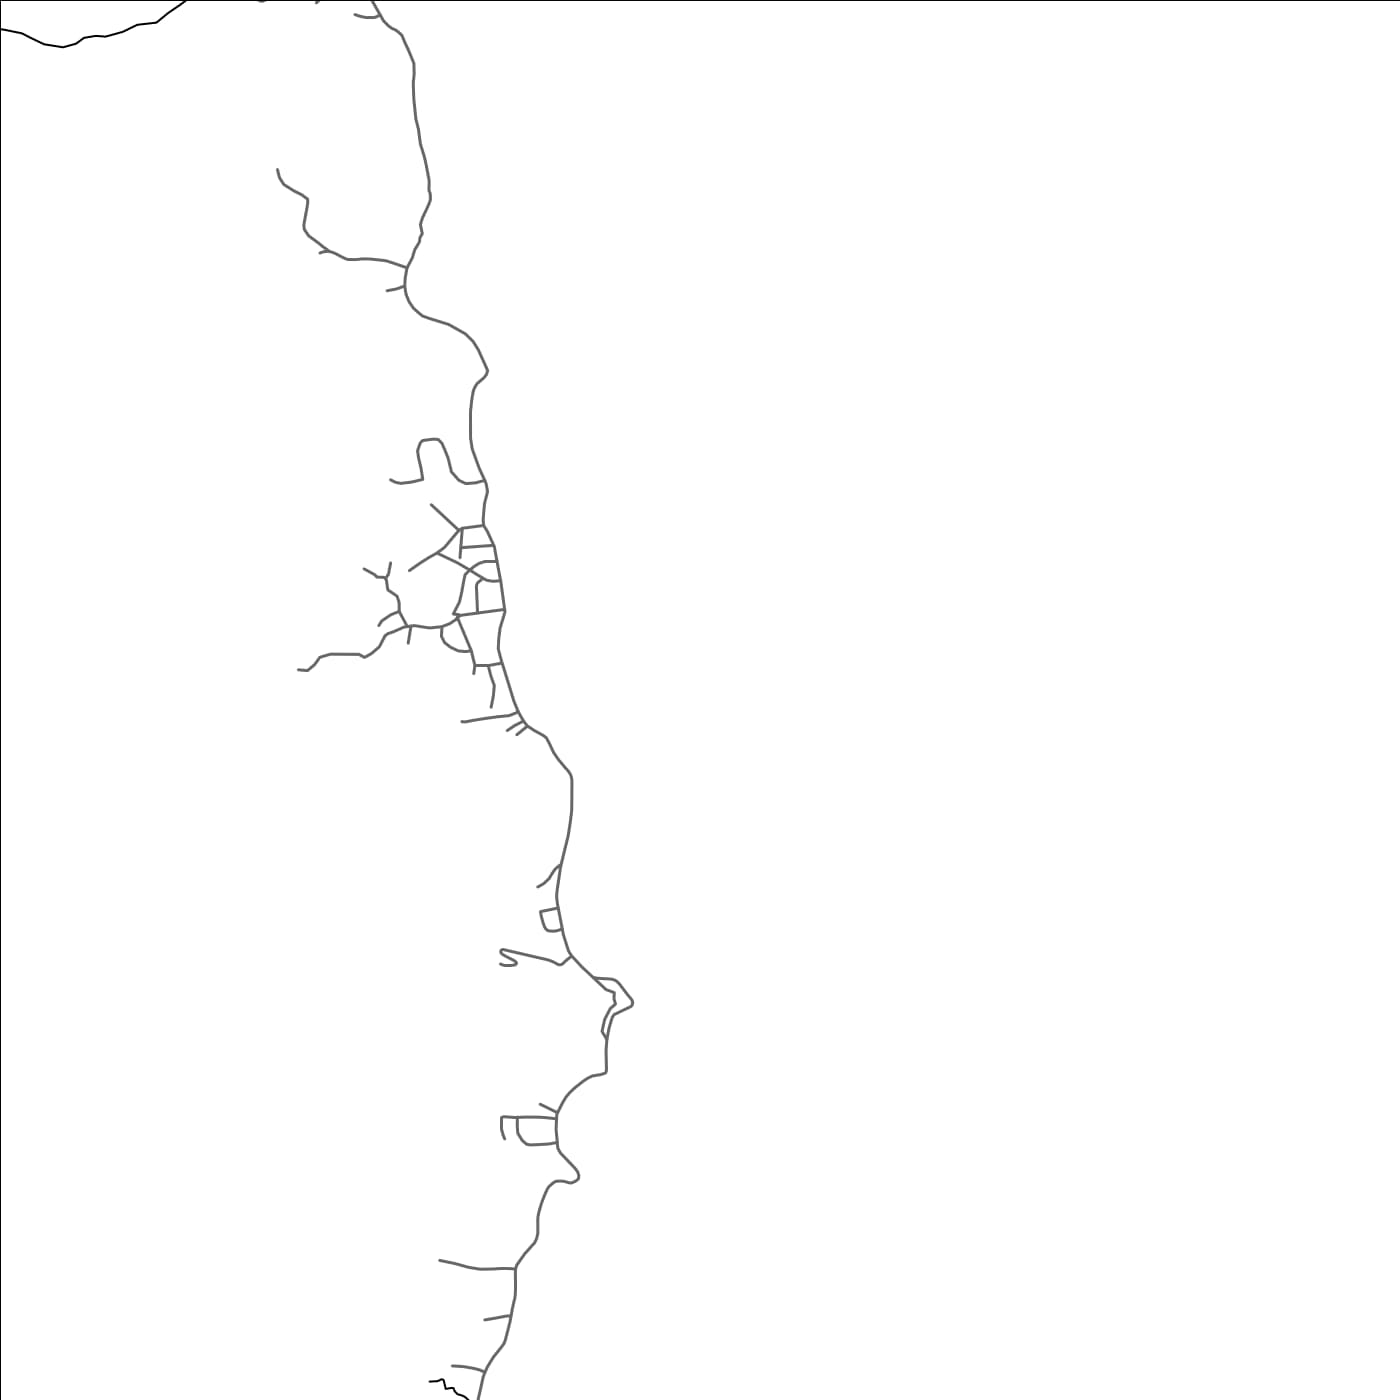 ROAD MAP OF LEVUKA, FIJI BY MAPBAKES